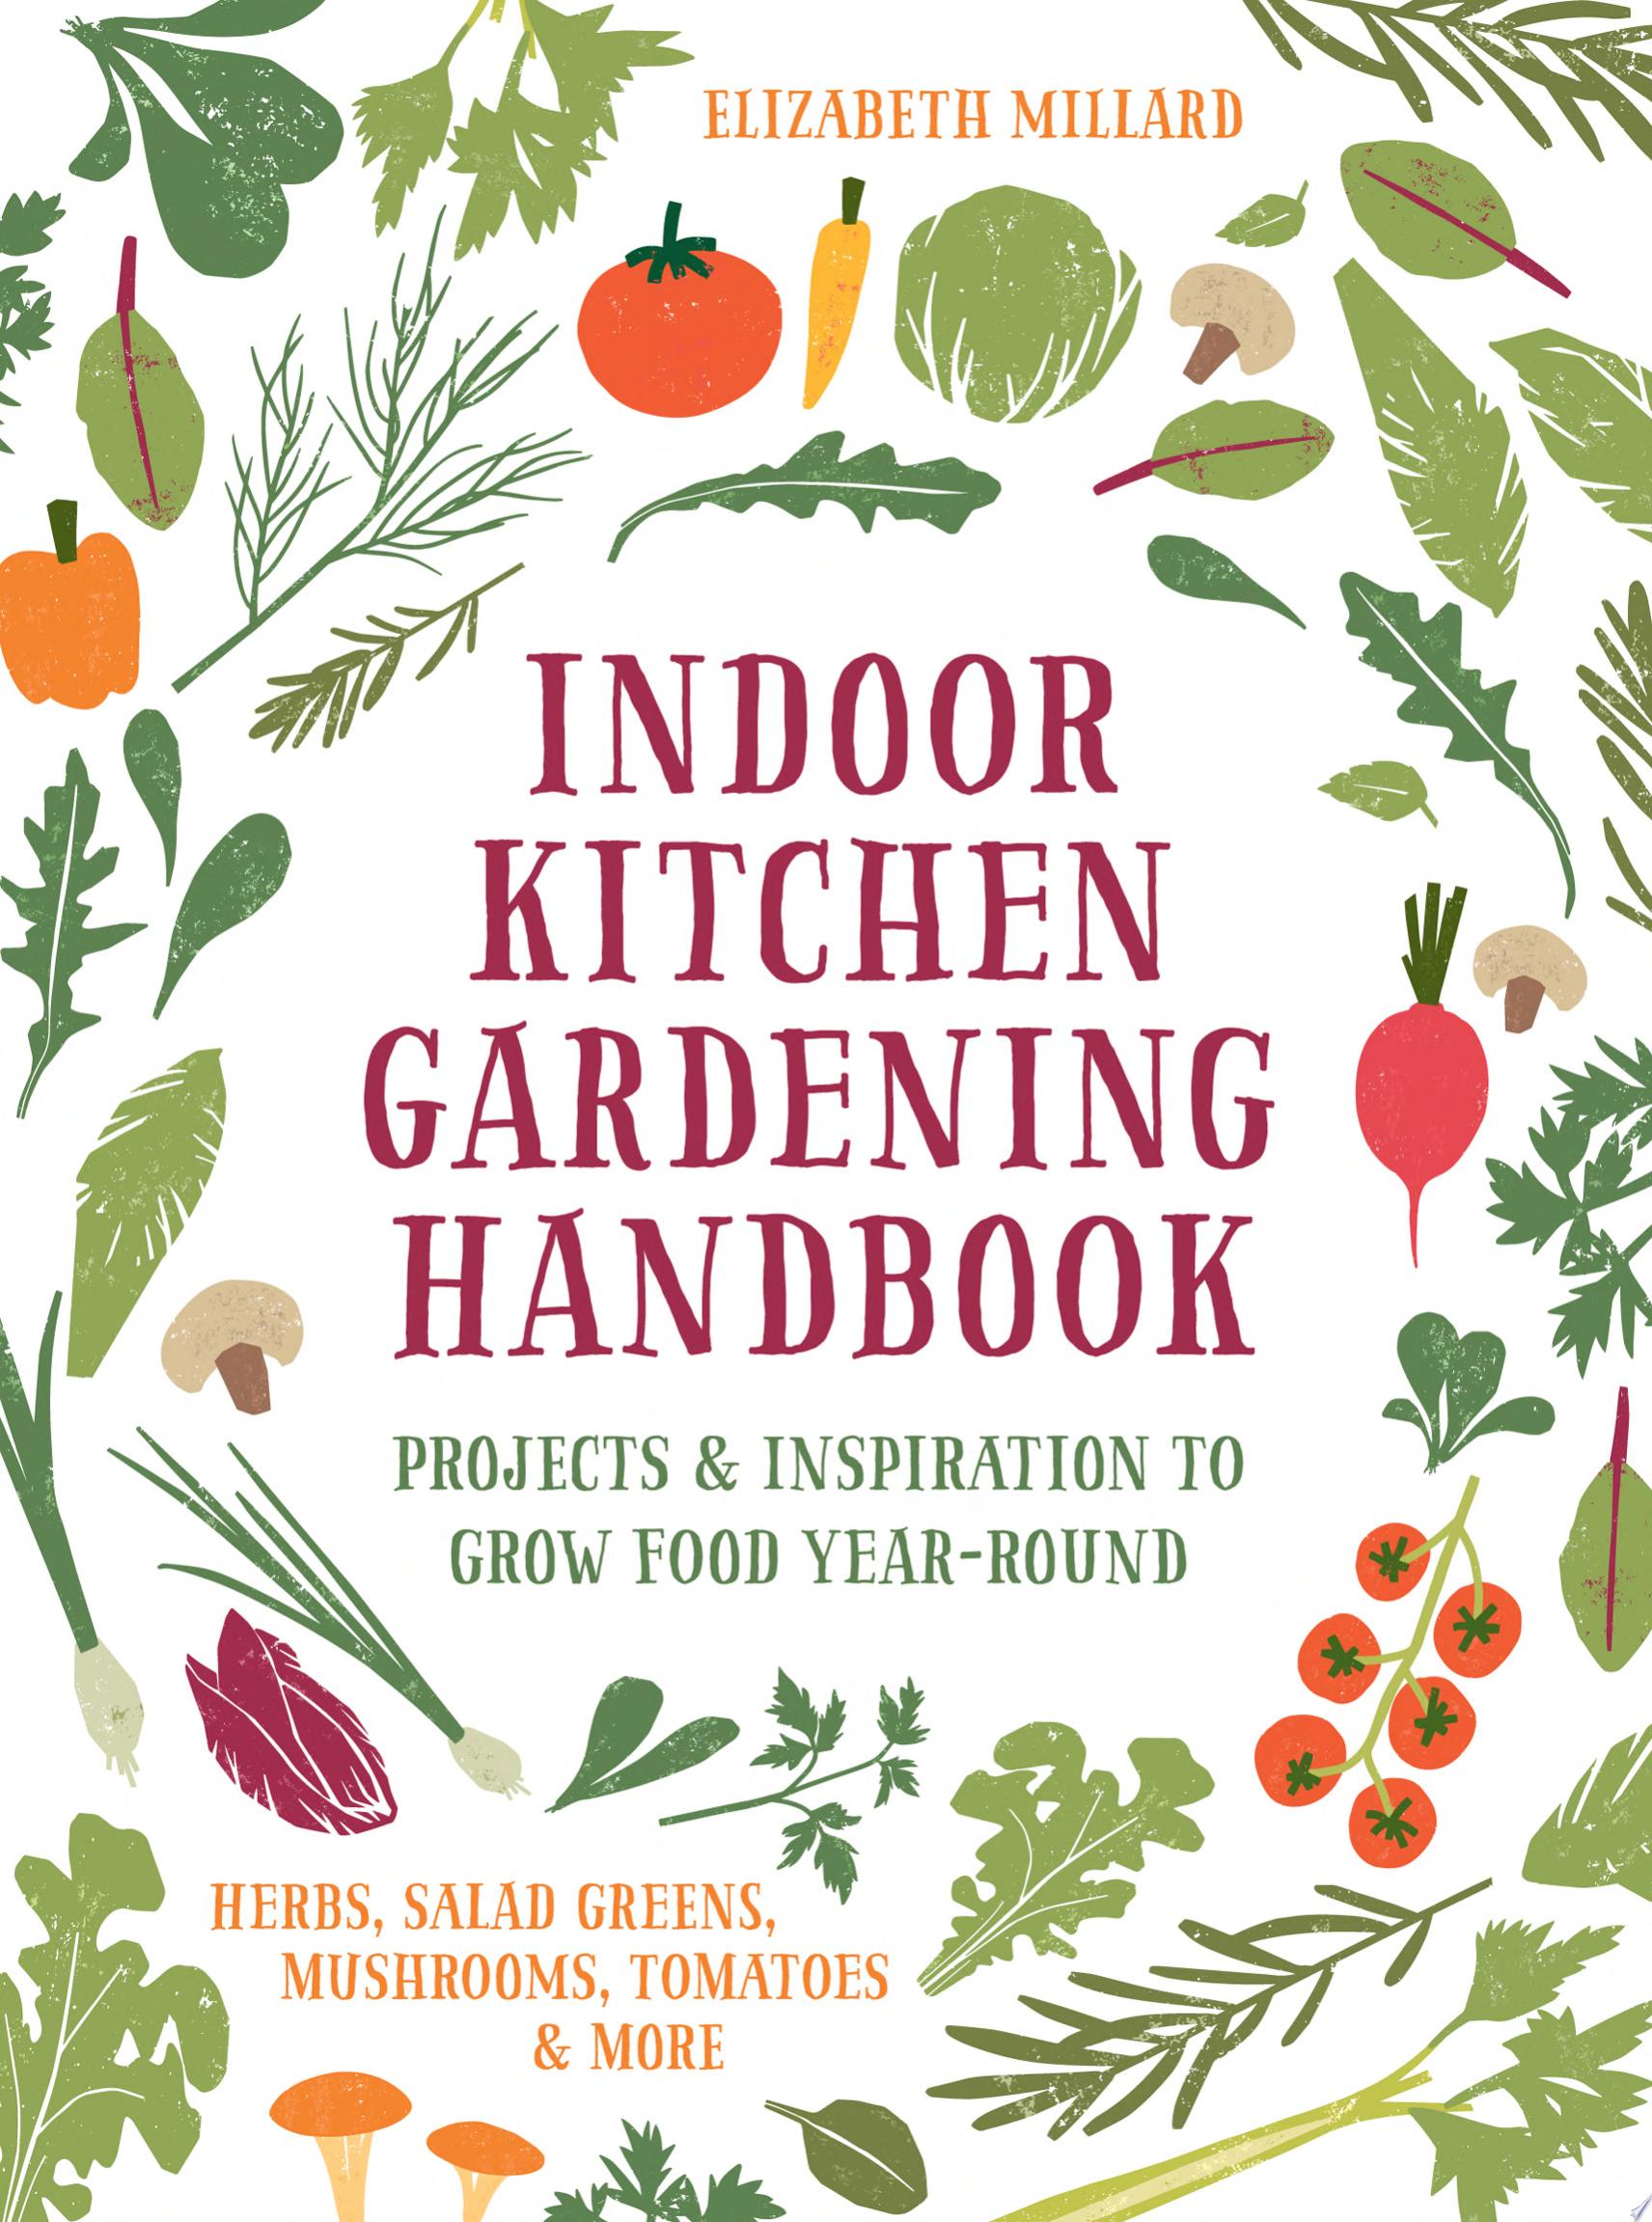 Image for "Indoor Kitchen Gardening Handbook"